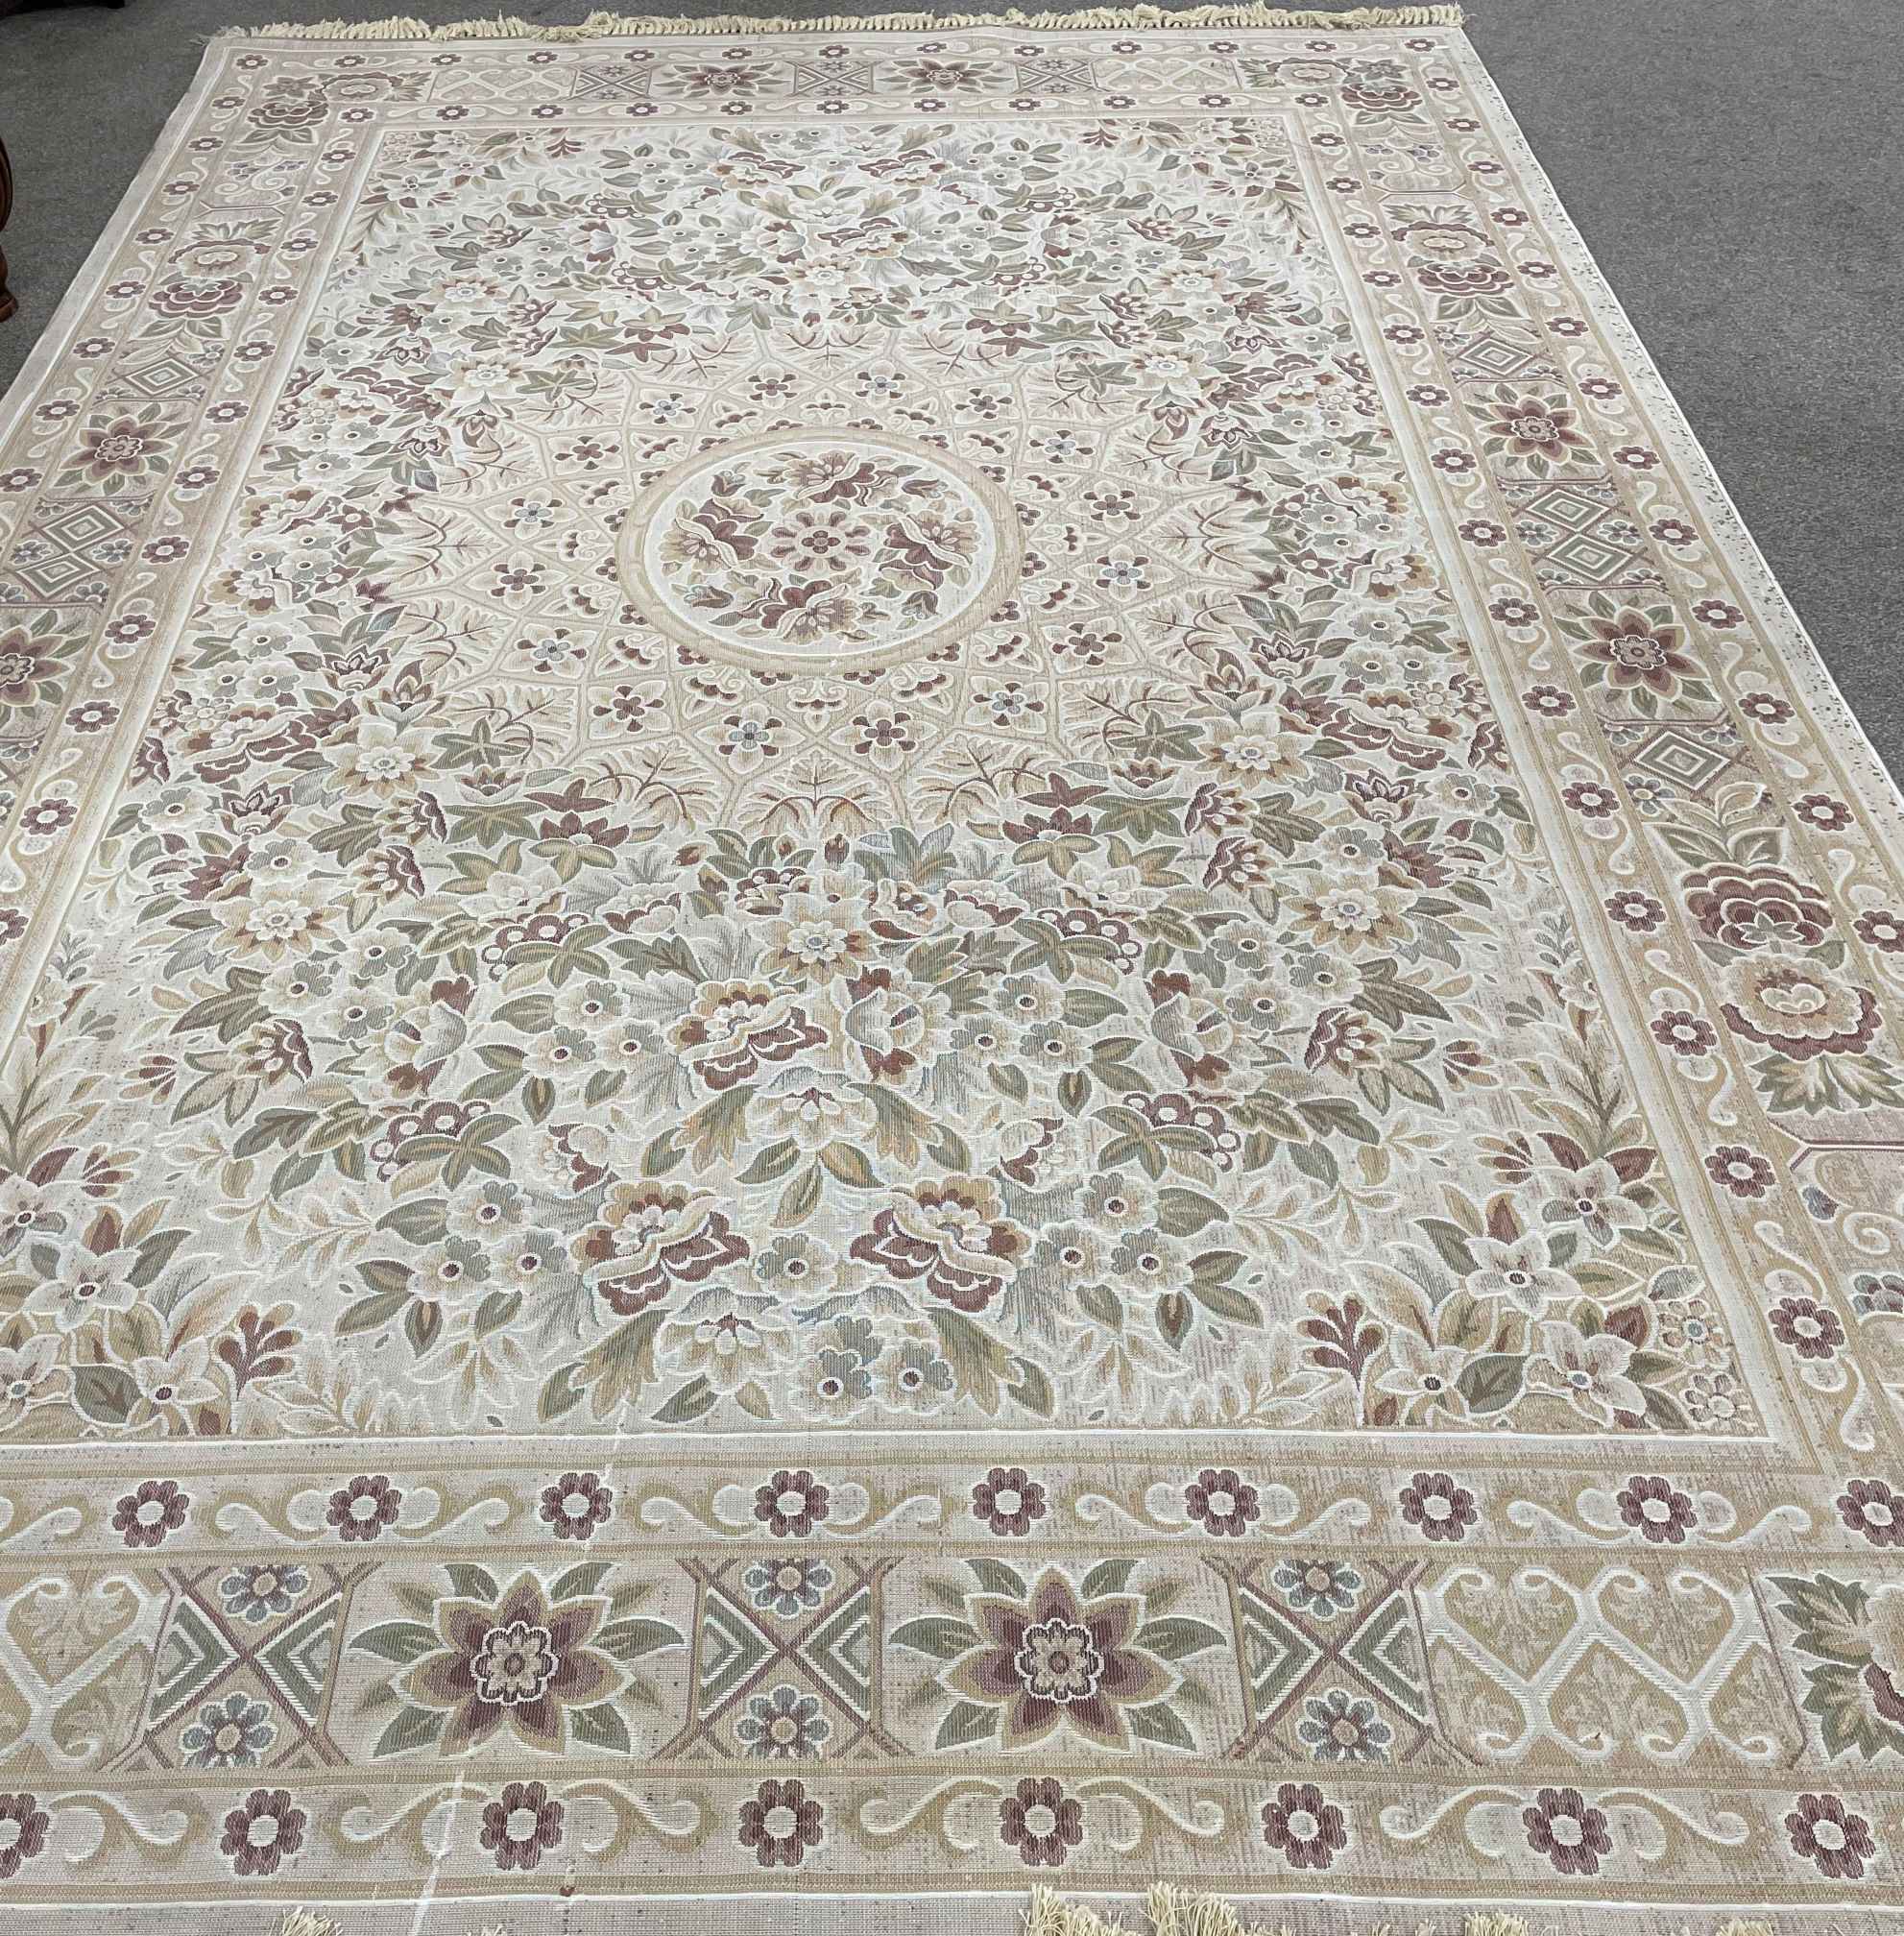 Gold & cream ground full pile Oriental carpet 350cm by 240cm - Image 4 of 4